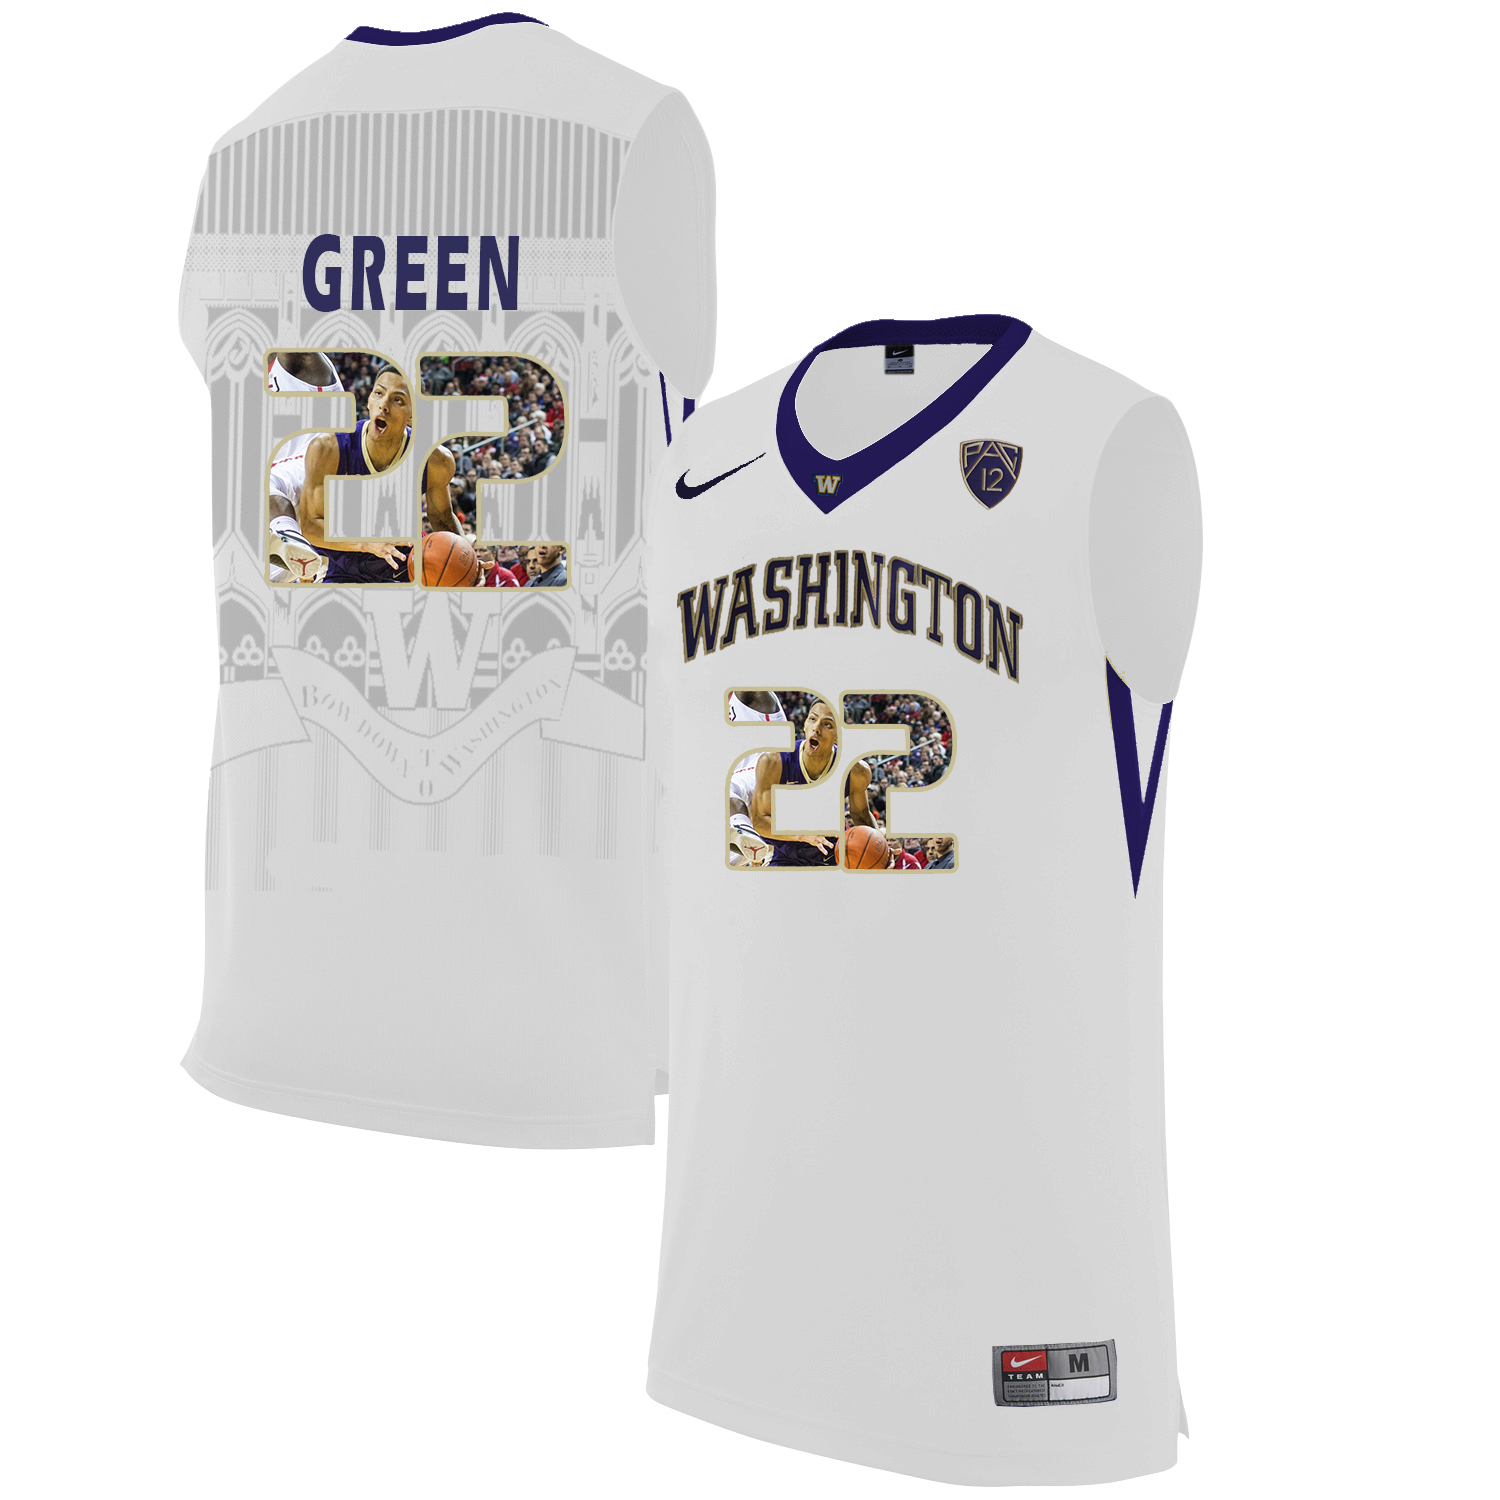 Washington Huskies 22 Dominic Green White With Portait College Basketball Jersey